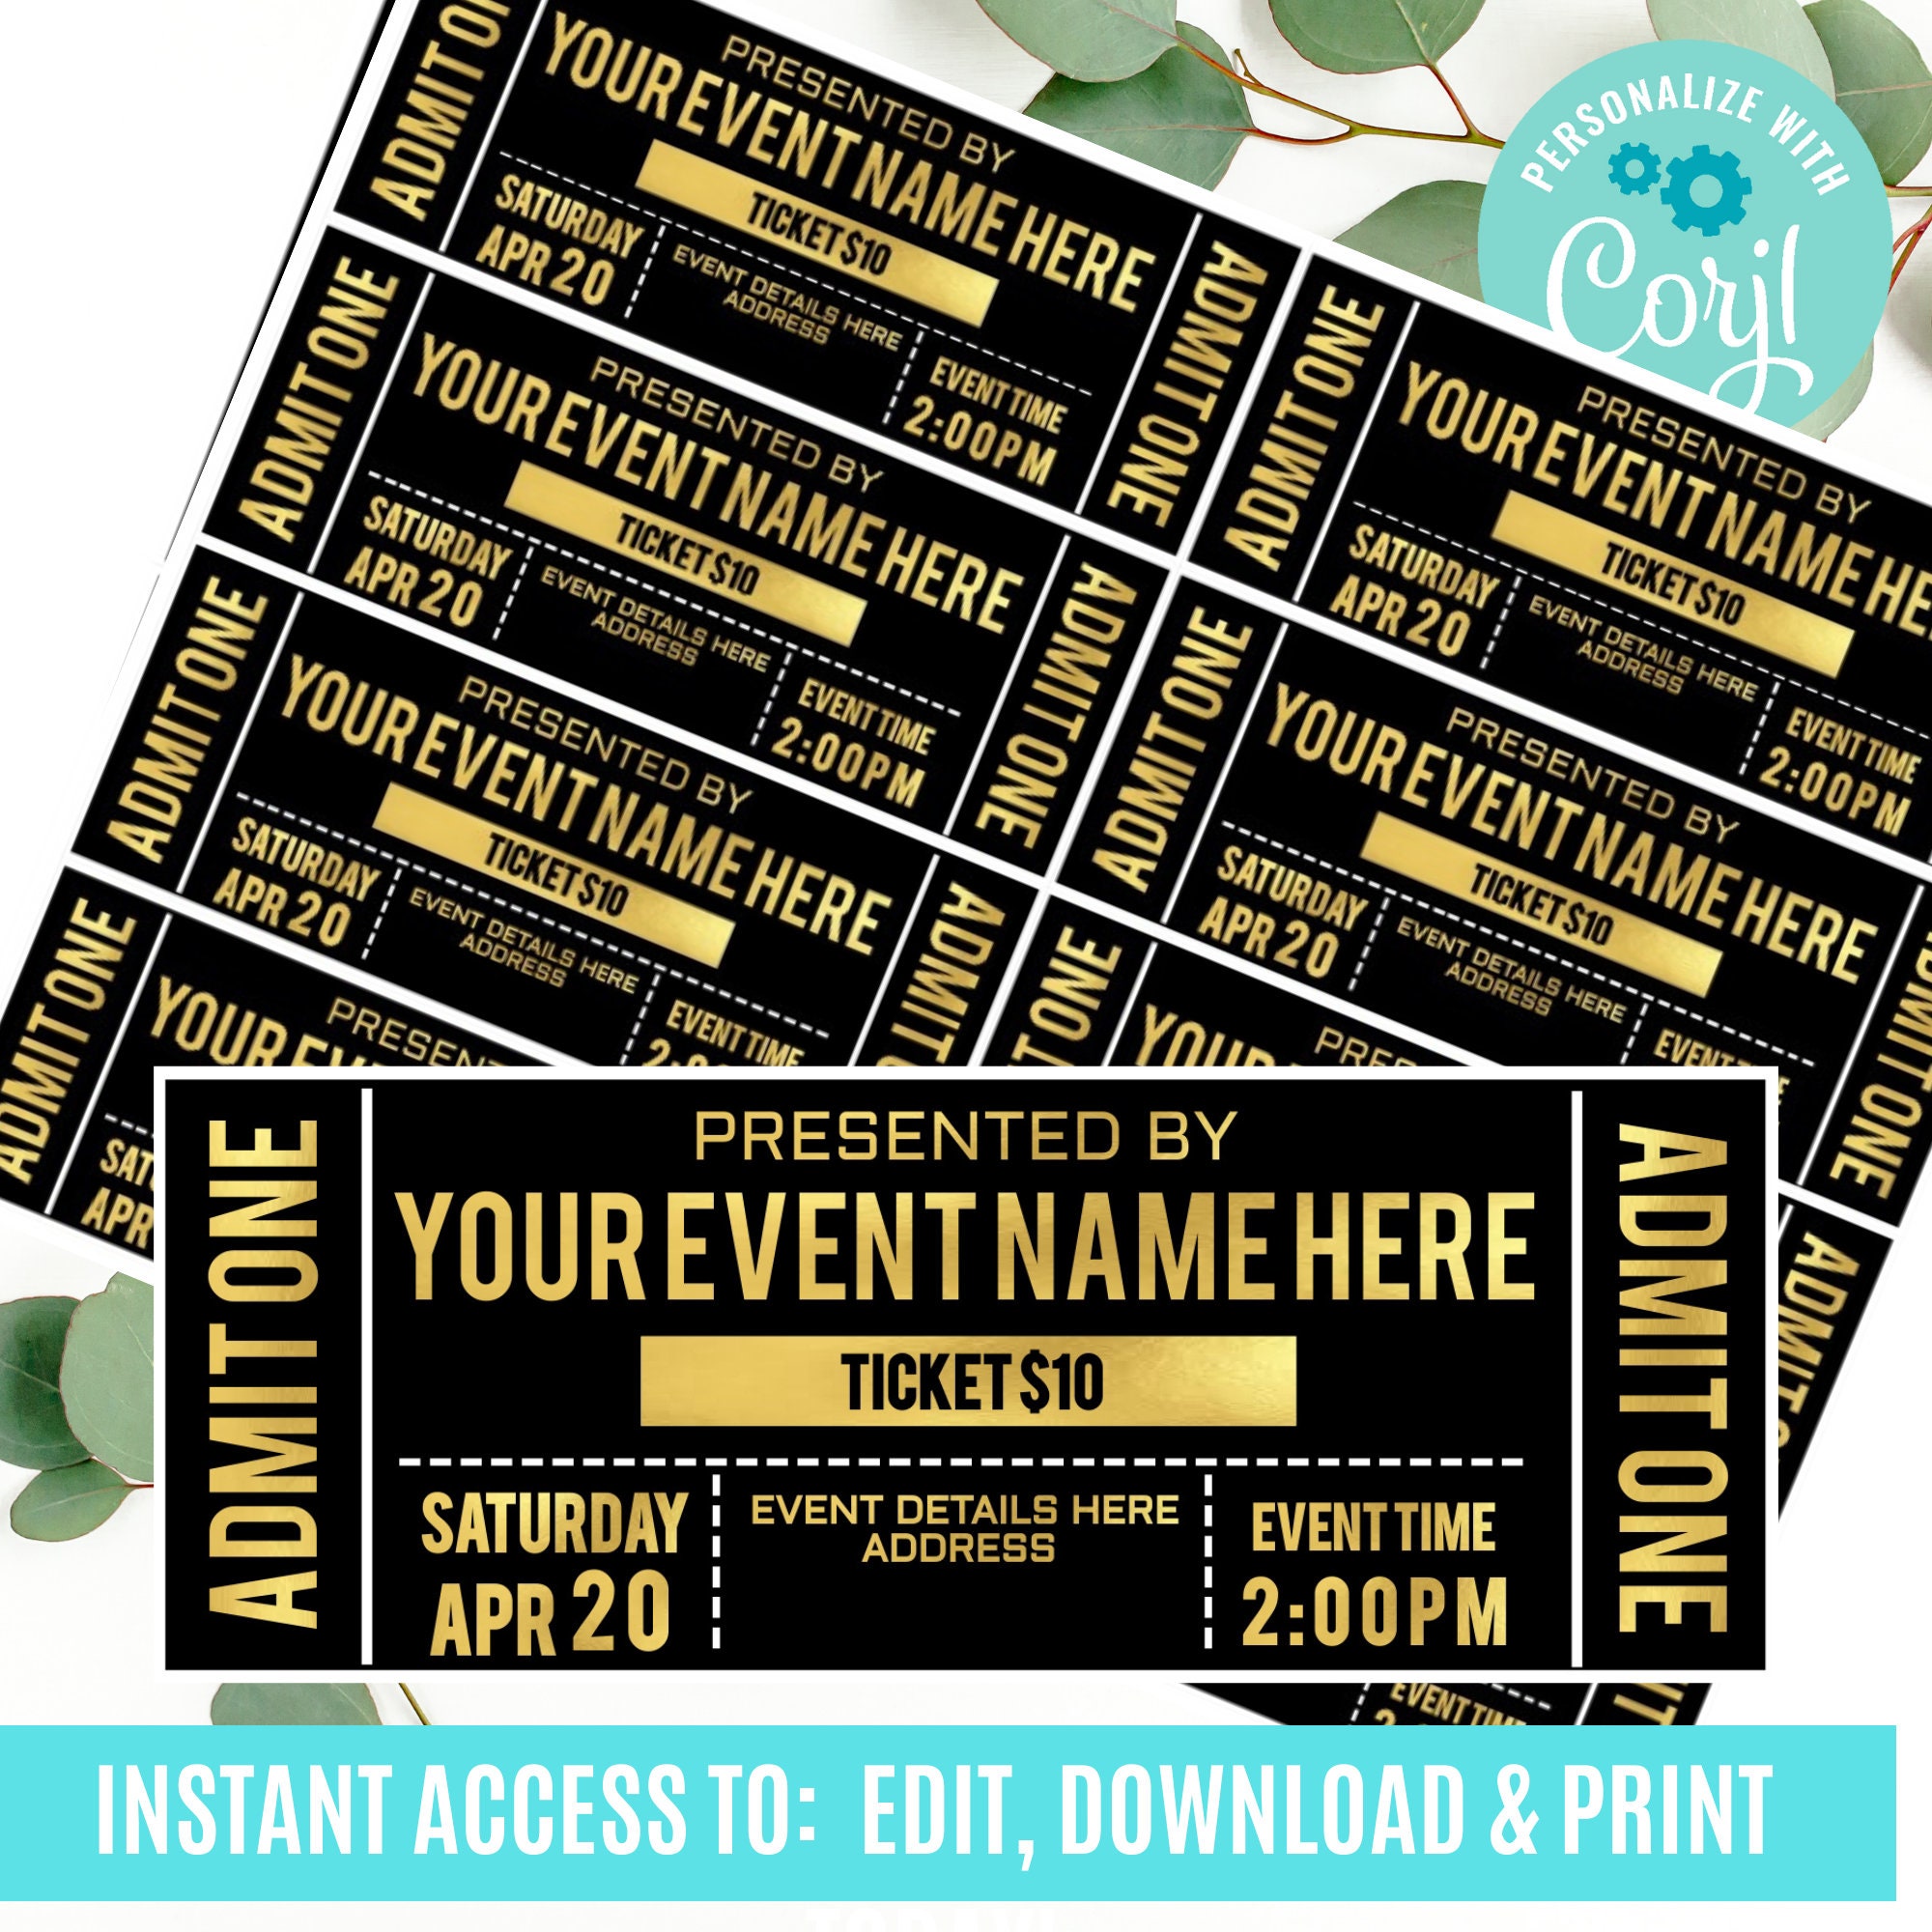 Sample event ticket deals